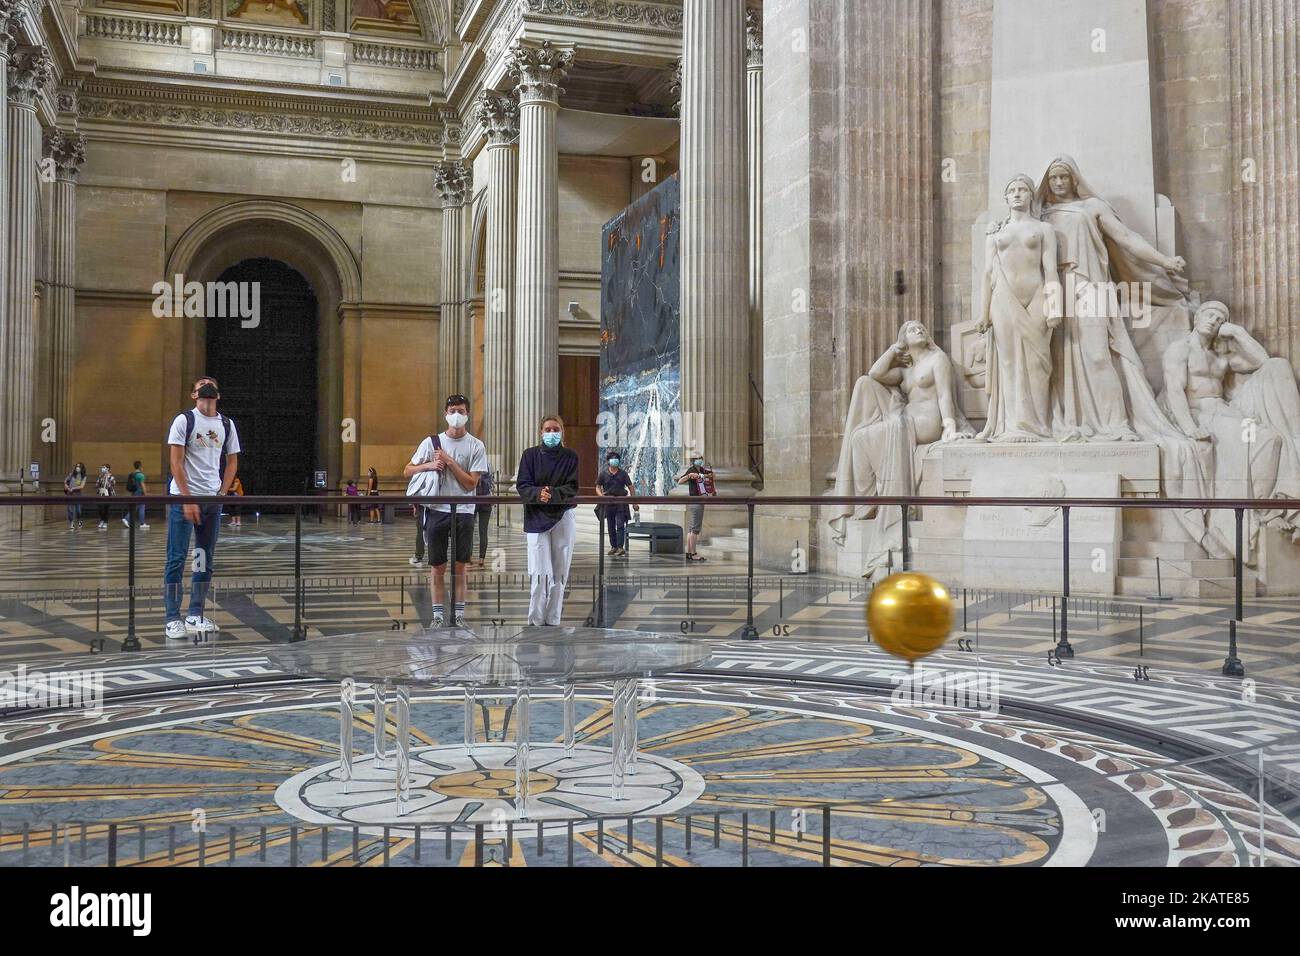 France, Paris, Pantheon in Latin quarter - The Foucault pendulum   Photo © Fabio Mazzarella/Sintesi/Alamy Stock Photo Stock Photo